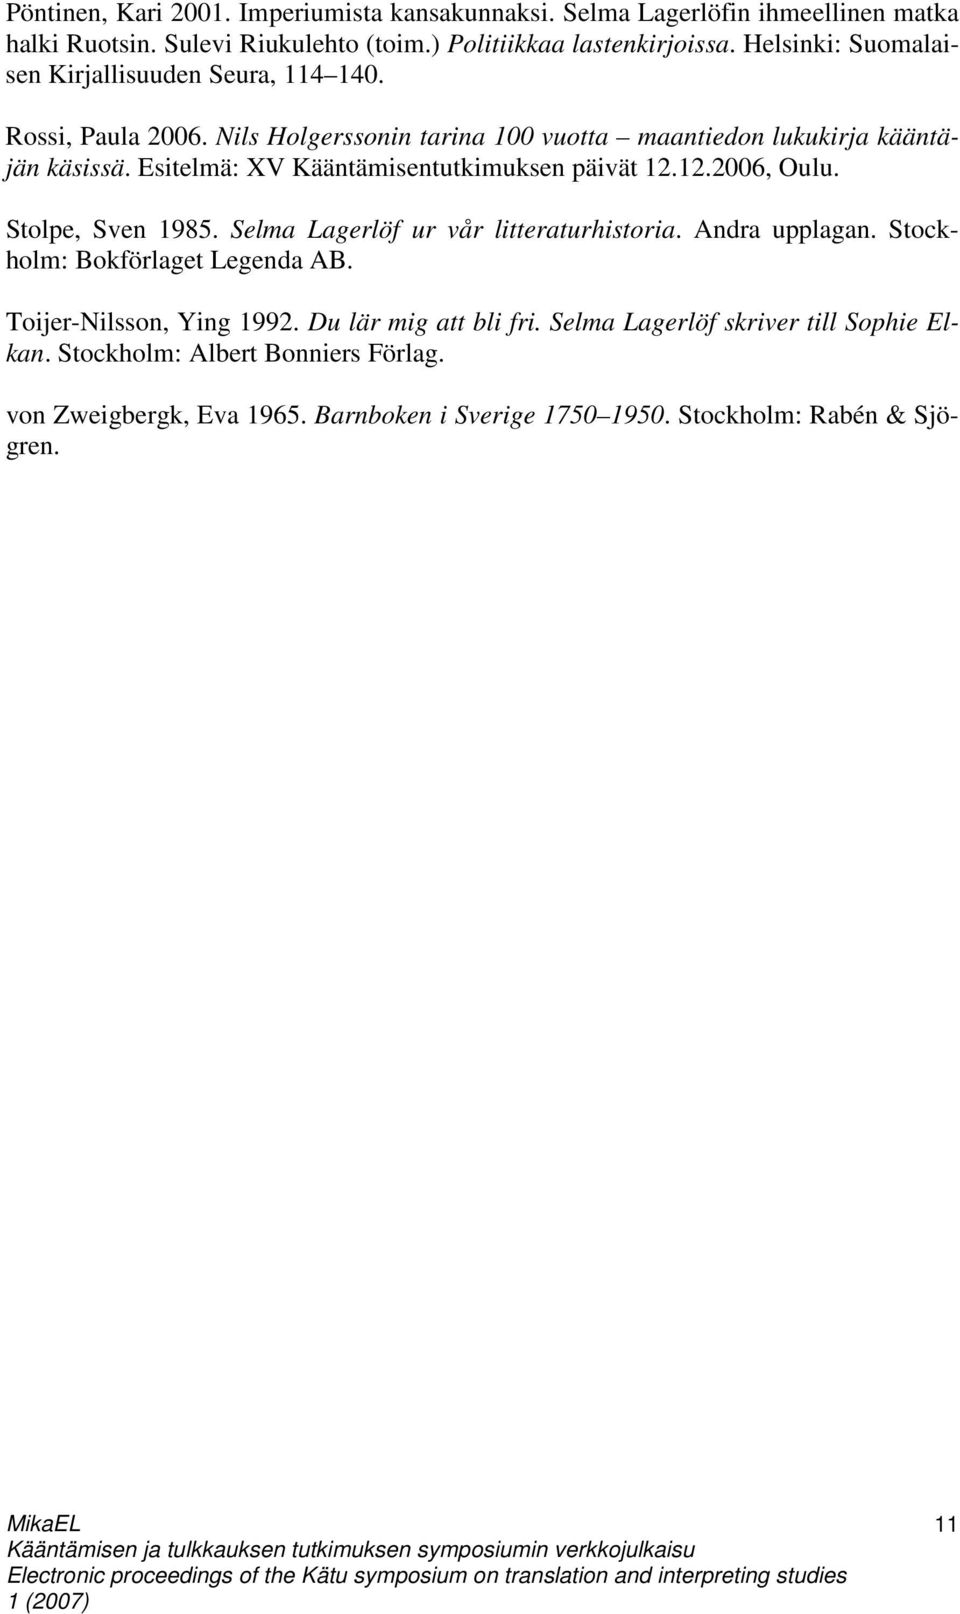 Esitelmä: XV Kääntämisentutkimuksen päivät 12.12.2006, Oulu. Stolpe, Sven 1985. Selma Lagerlöf ur vår litteraturhistoria. Andra upplagan. Stockholm: Bokförlaget Legenda AB.